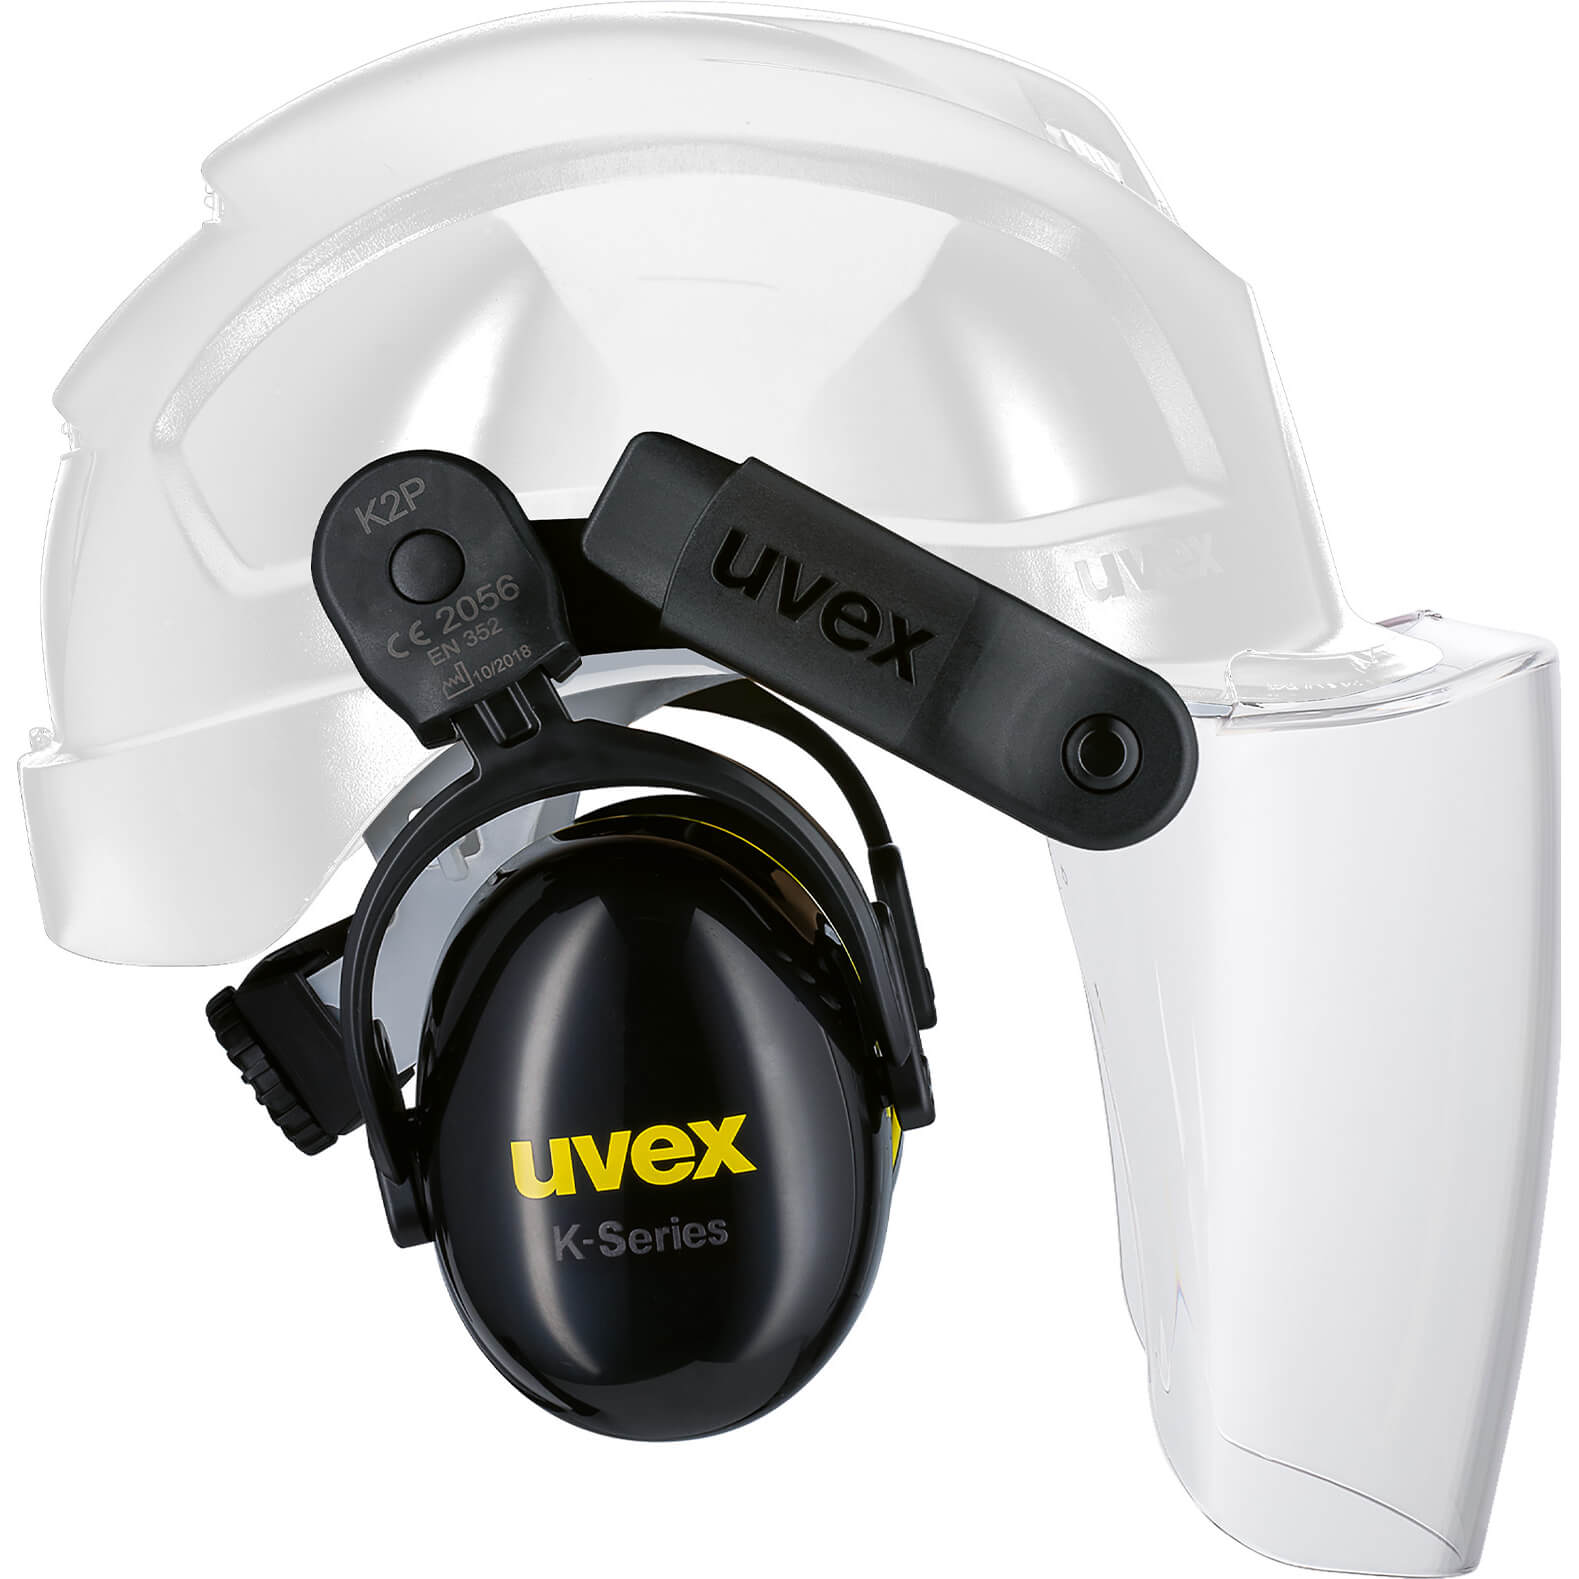 Uvex Pheos Magnetic Safety Helmet Visor and Ear Defenders